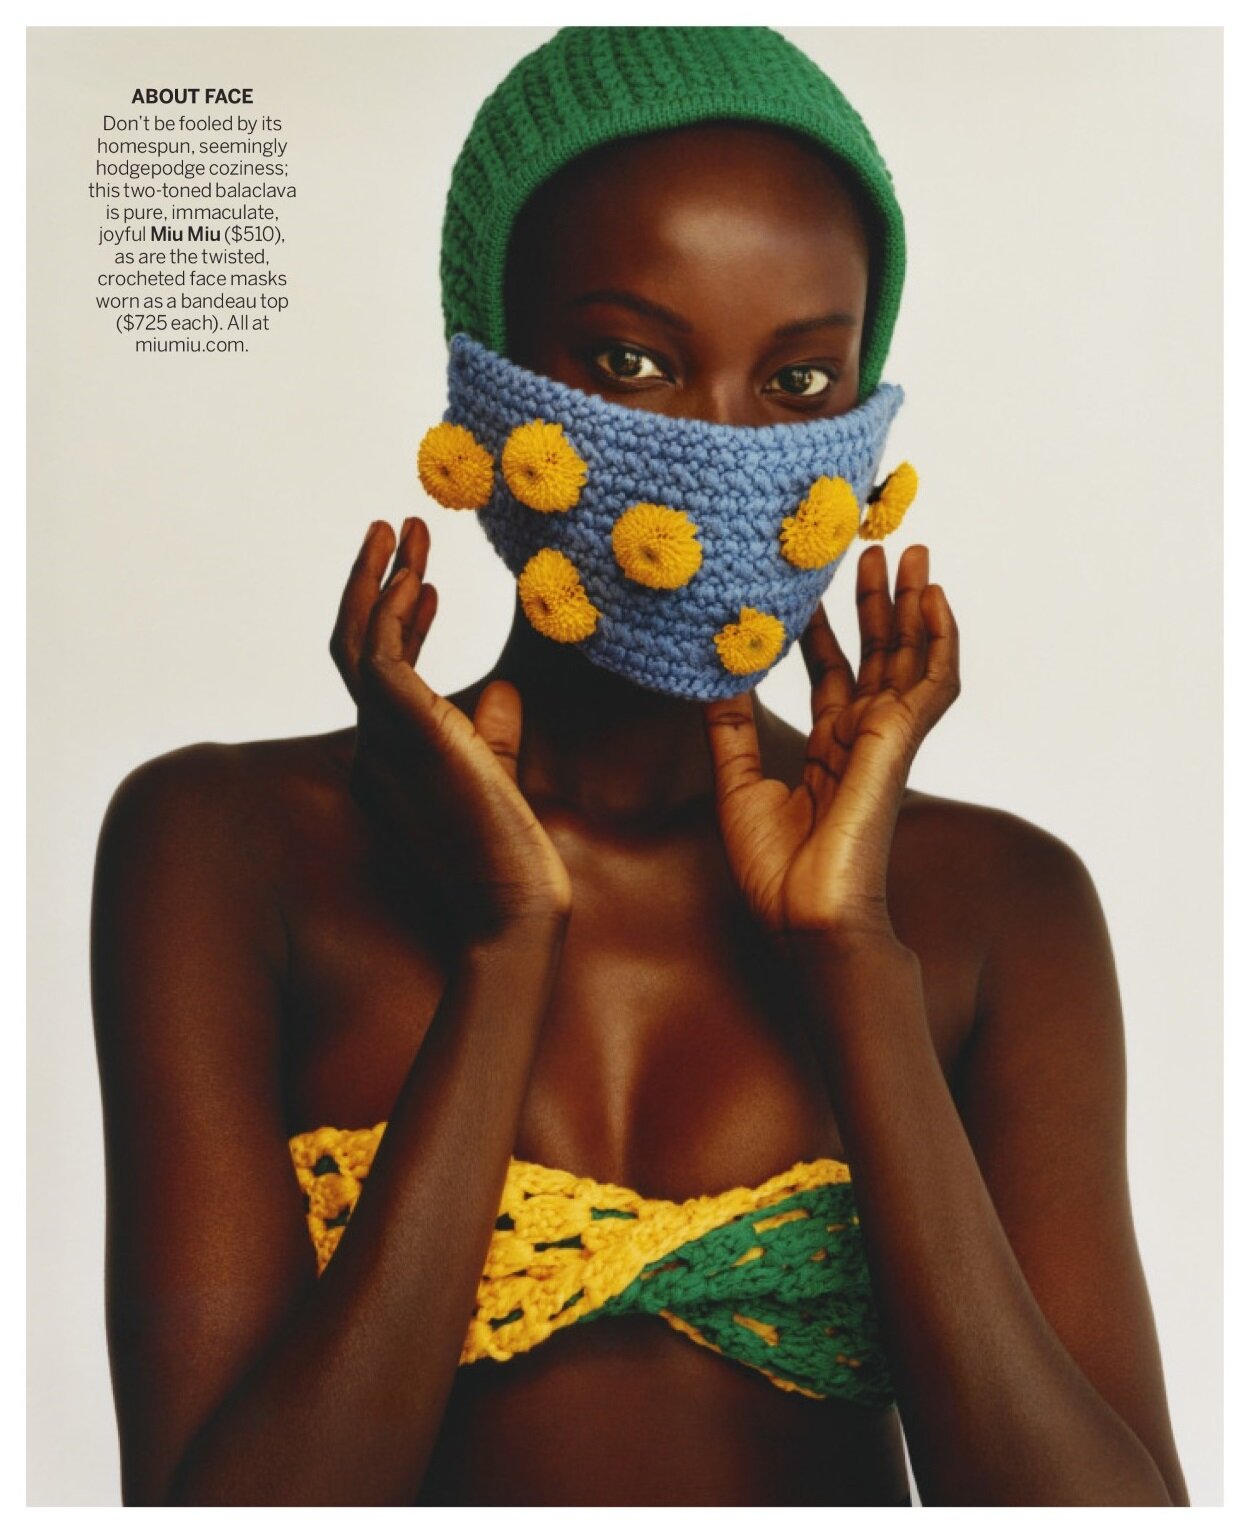 Anok-Yai-by-Theo-de-Gueltzl-for Vogue-US-August-2021 (8).jpg